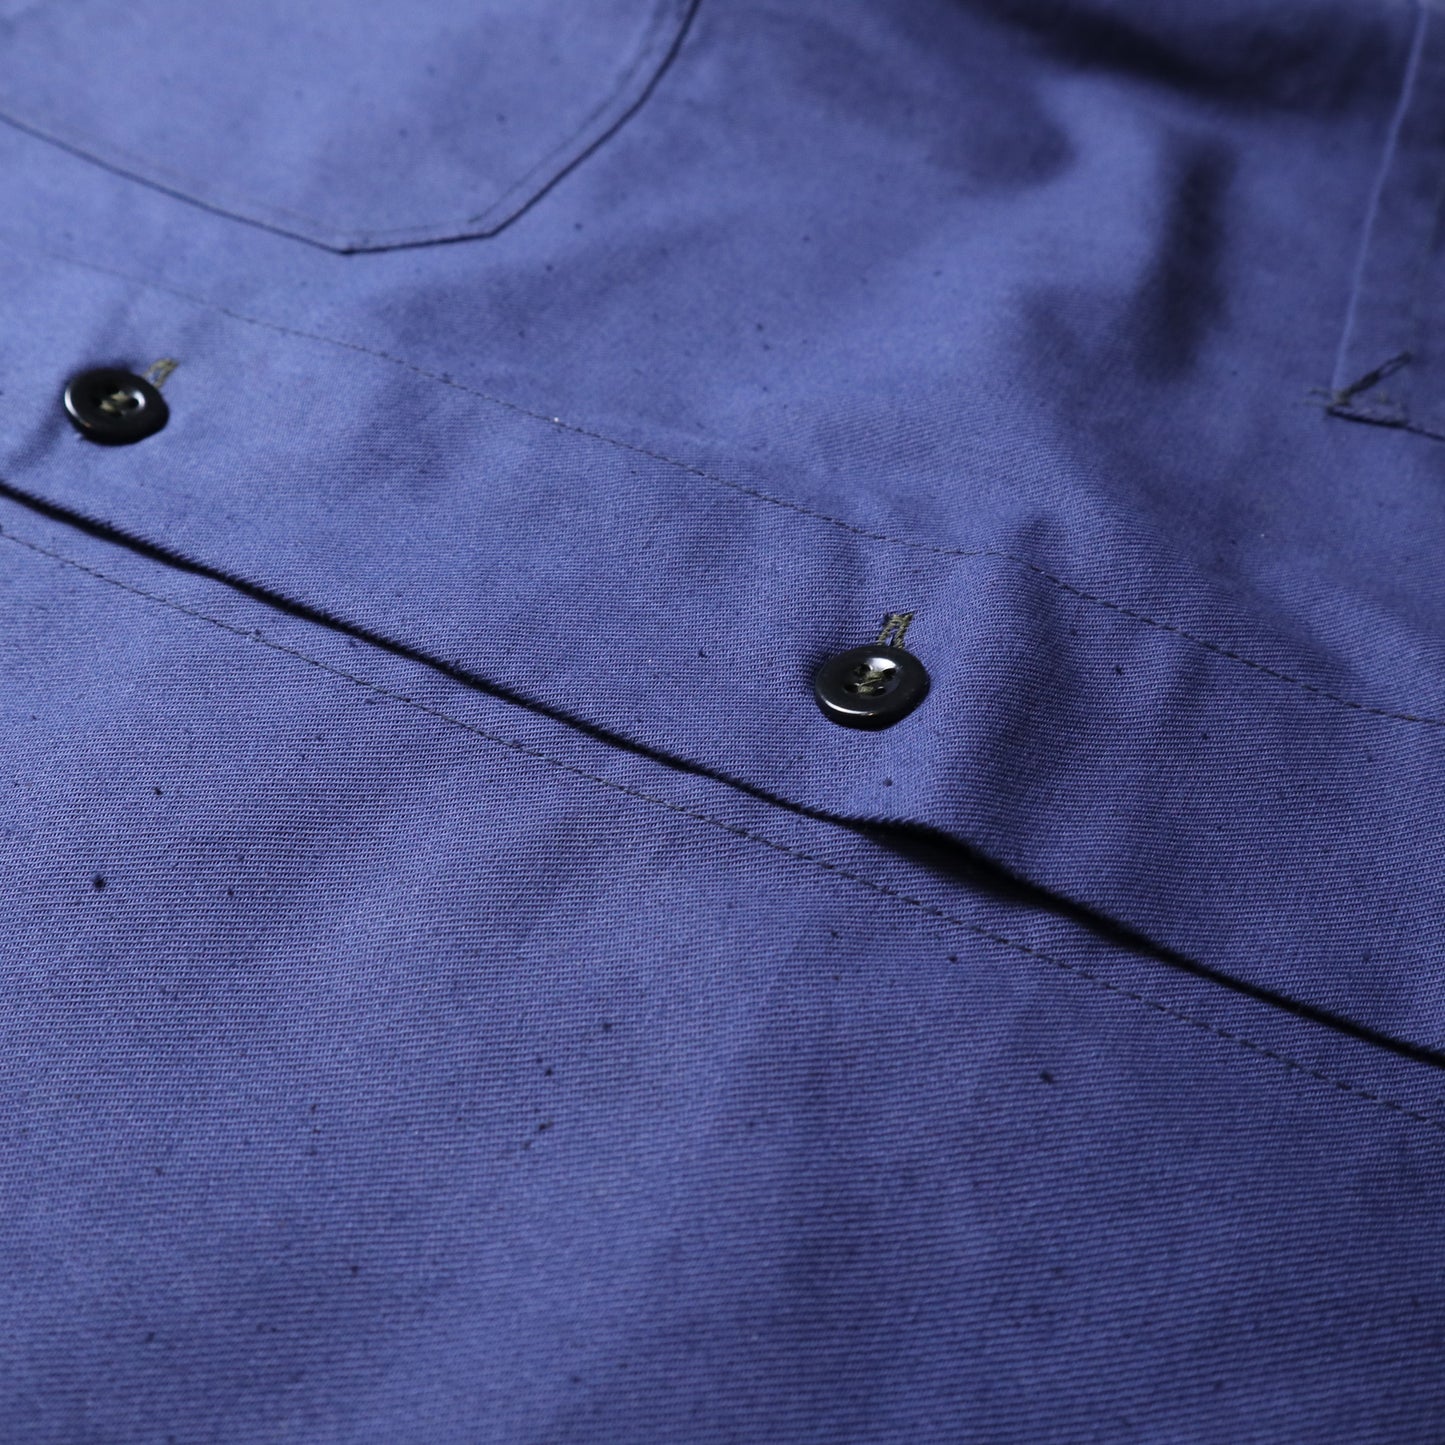 藍色法國工裝外套 French work jacket